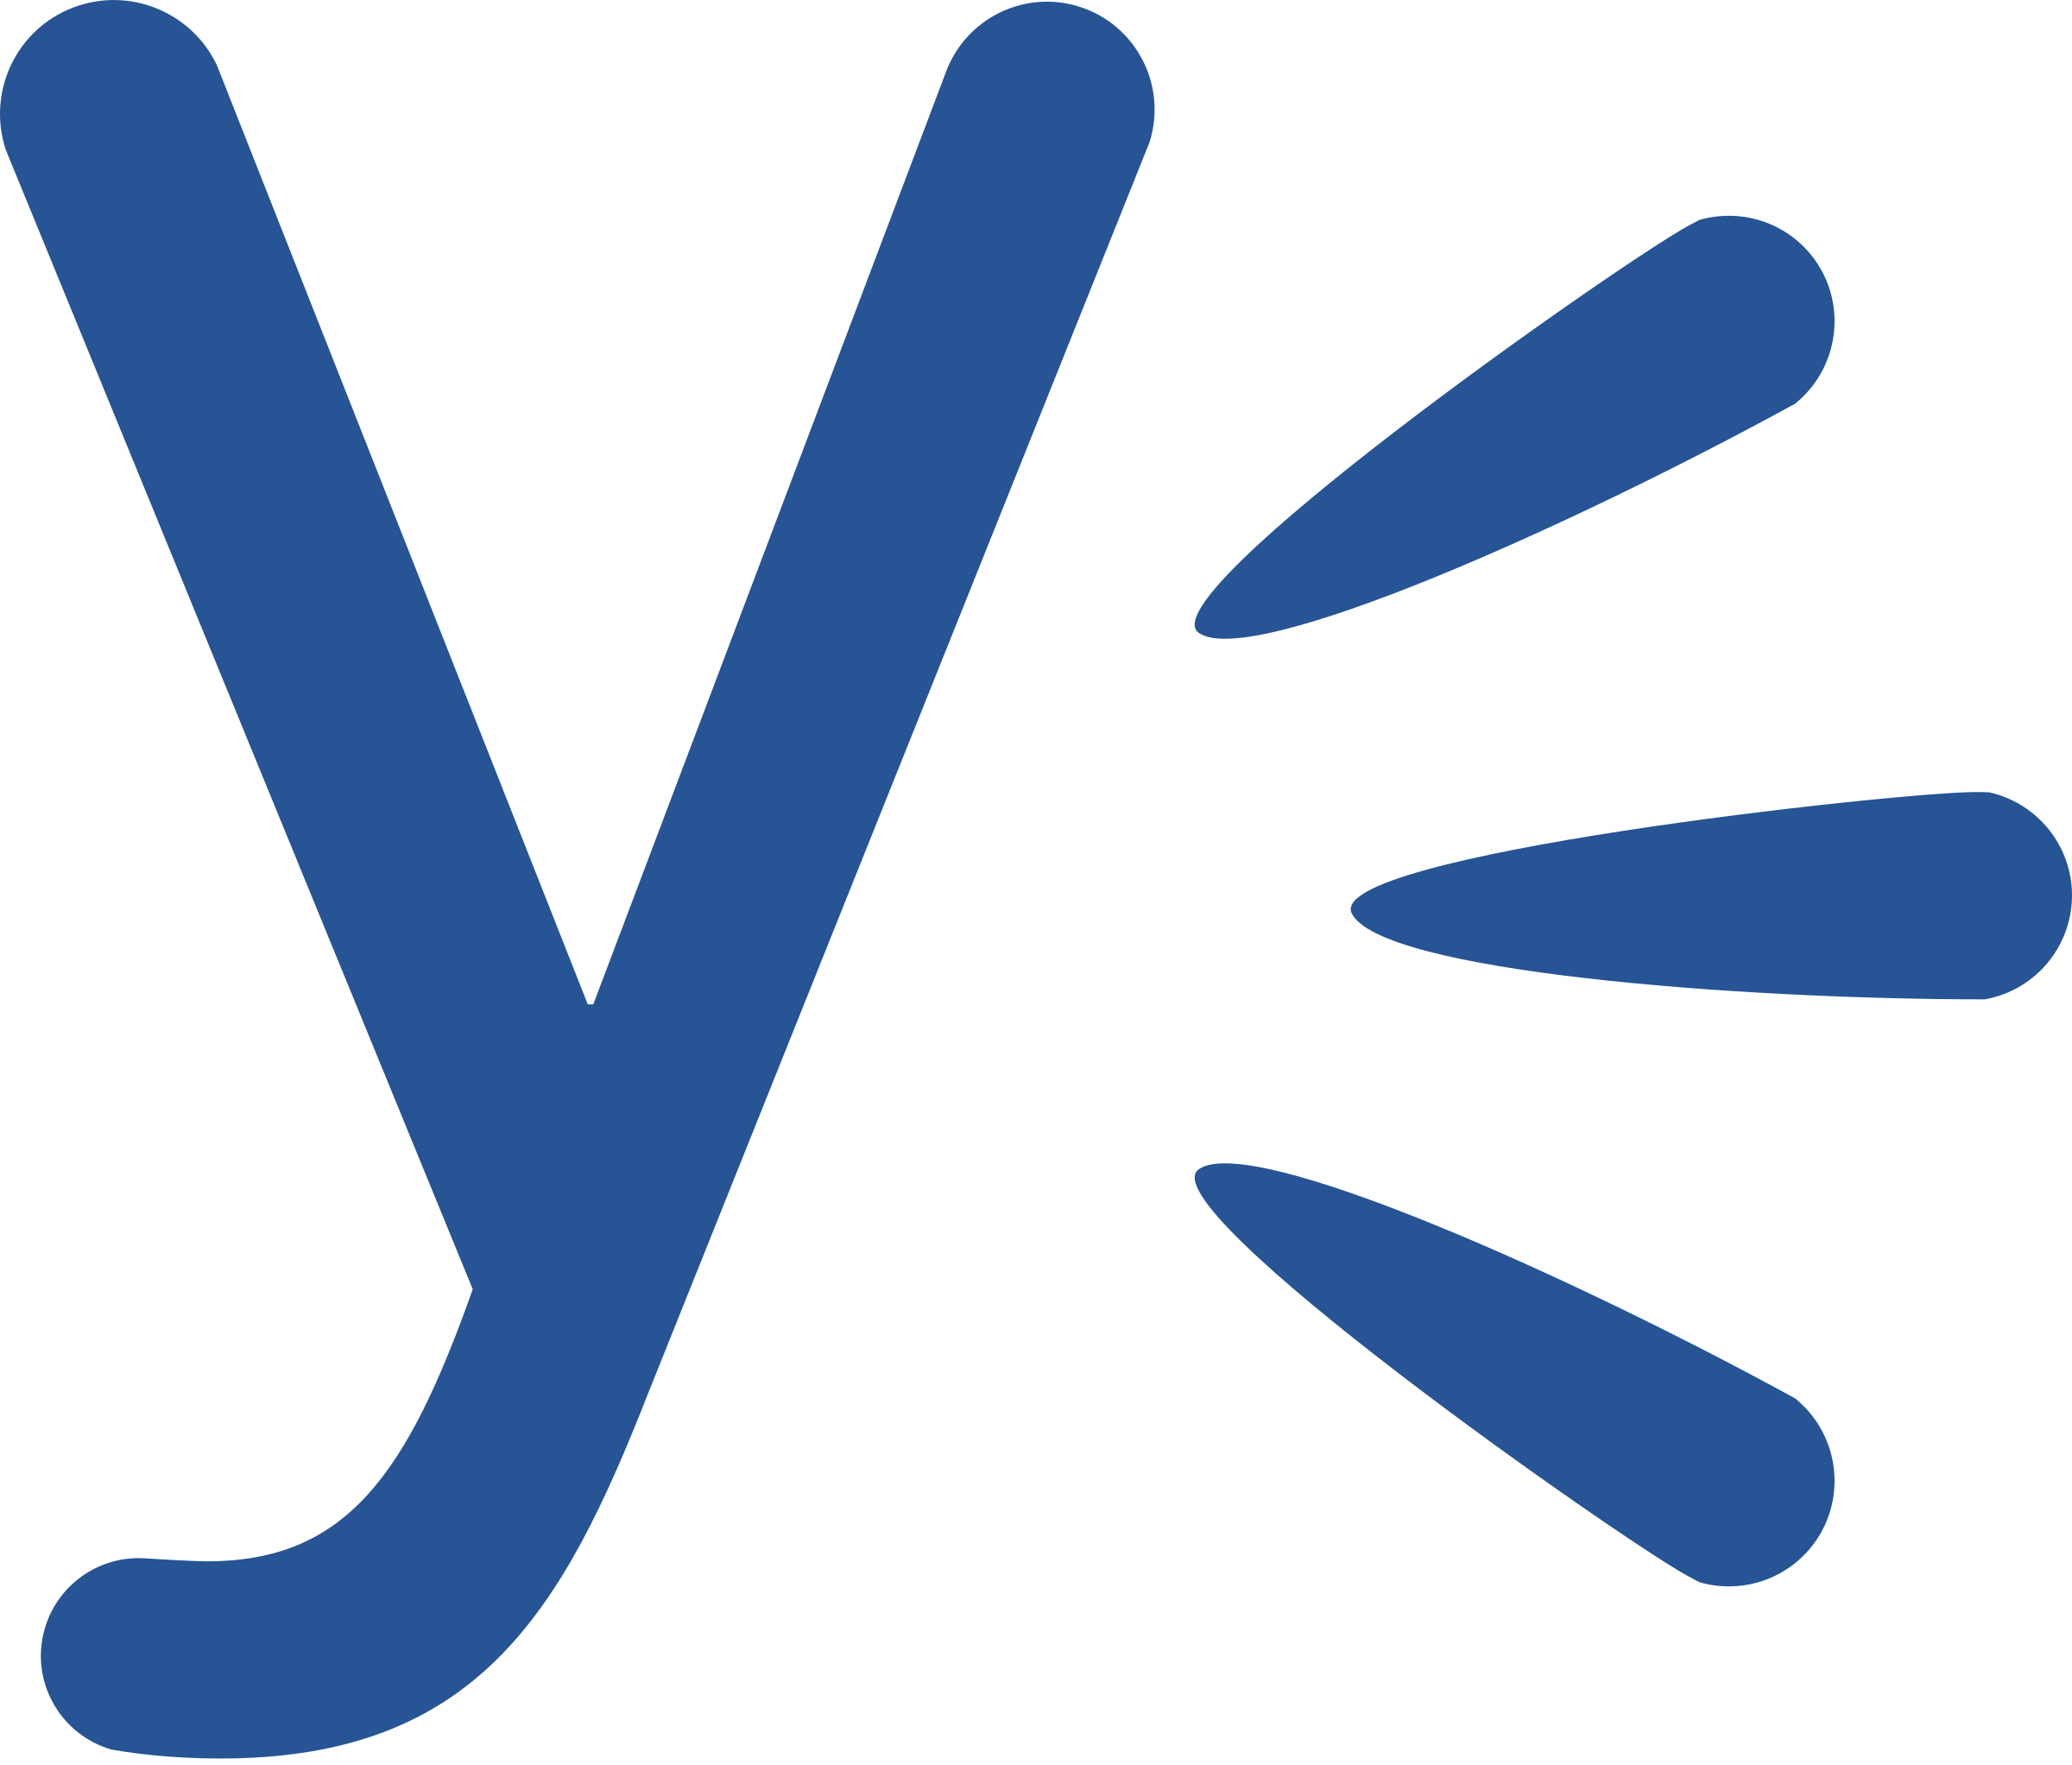 Yammer Y Logo Transparent Png